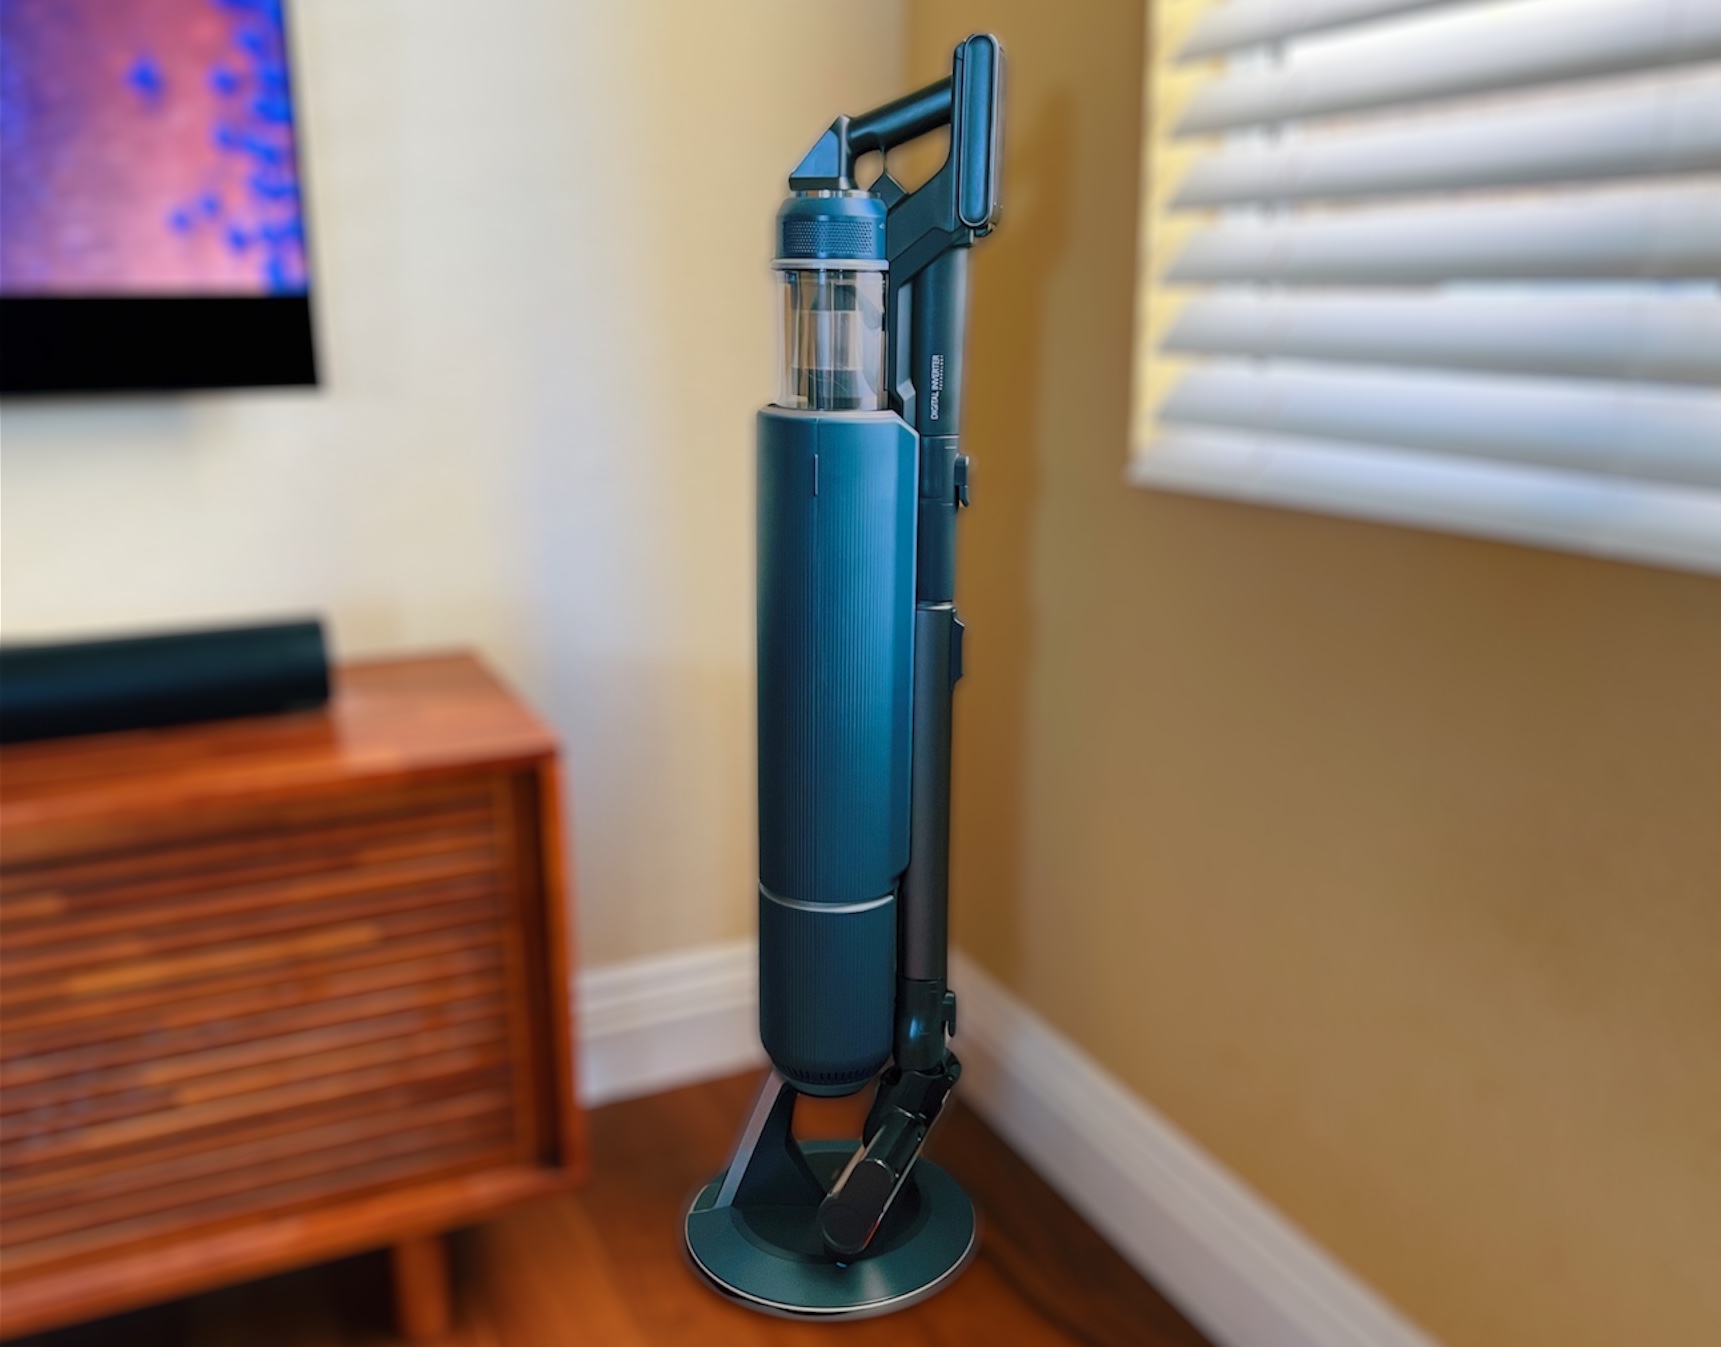 Samsung Bespoke Jet Cordless Stick Vacuum